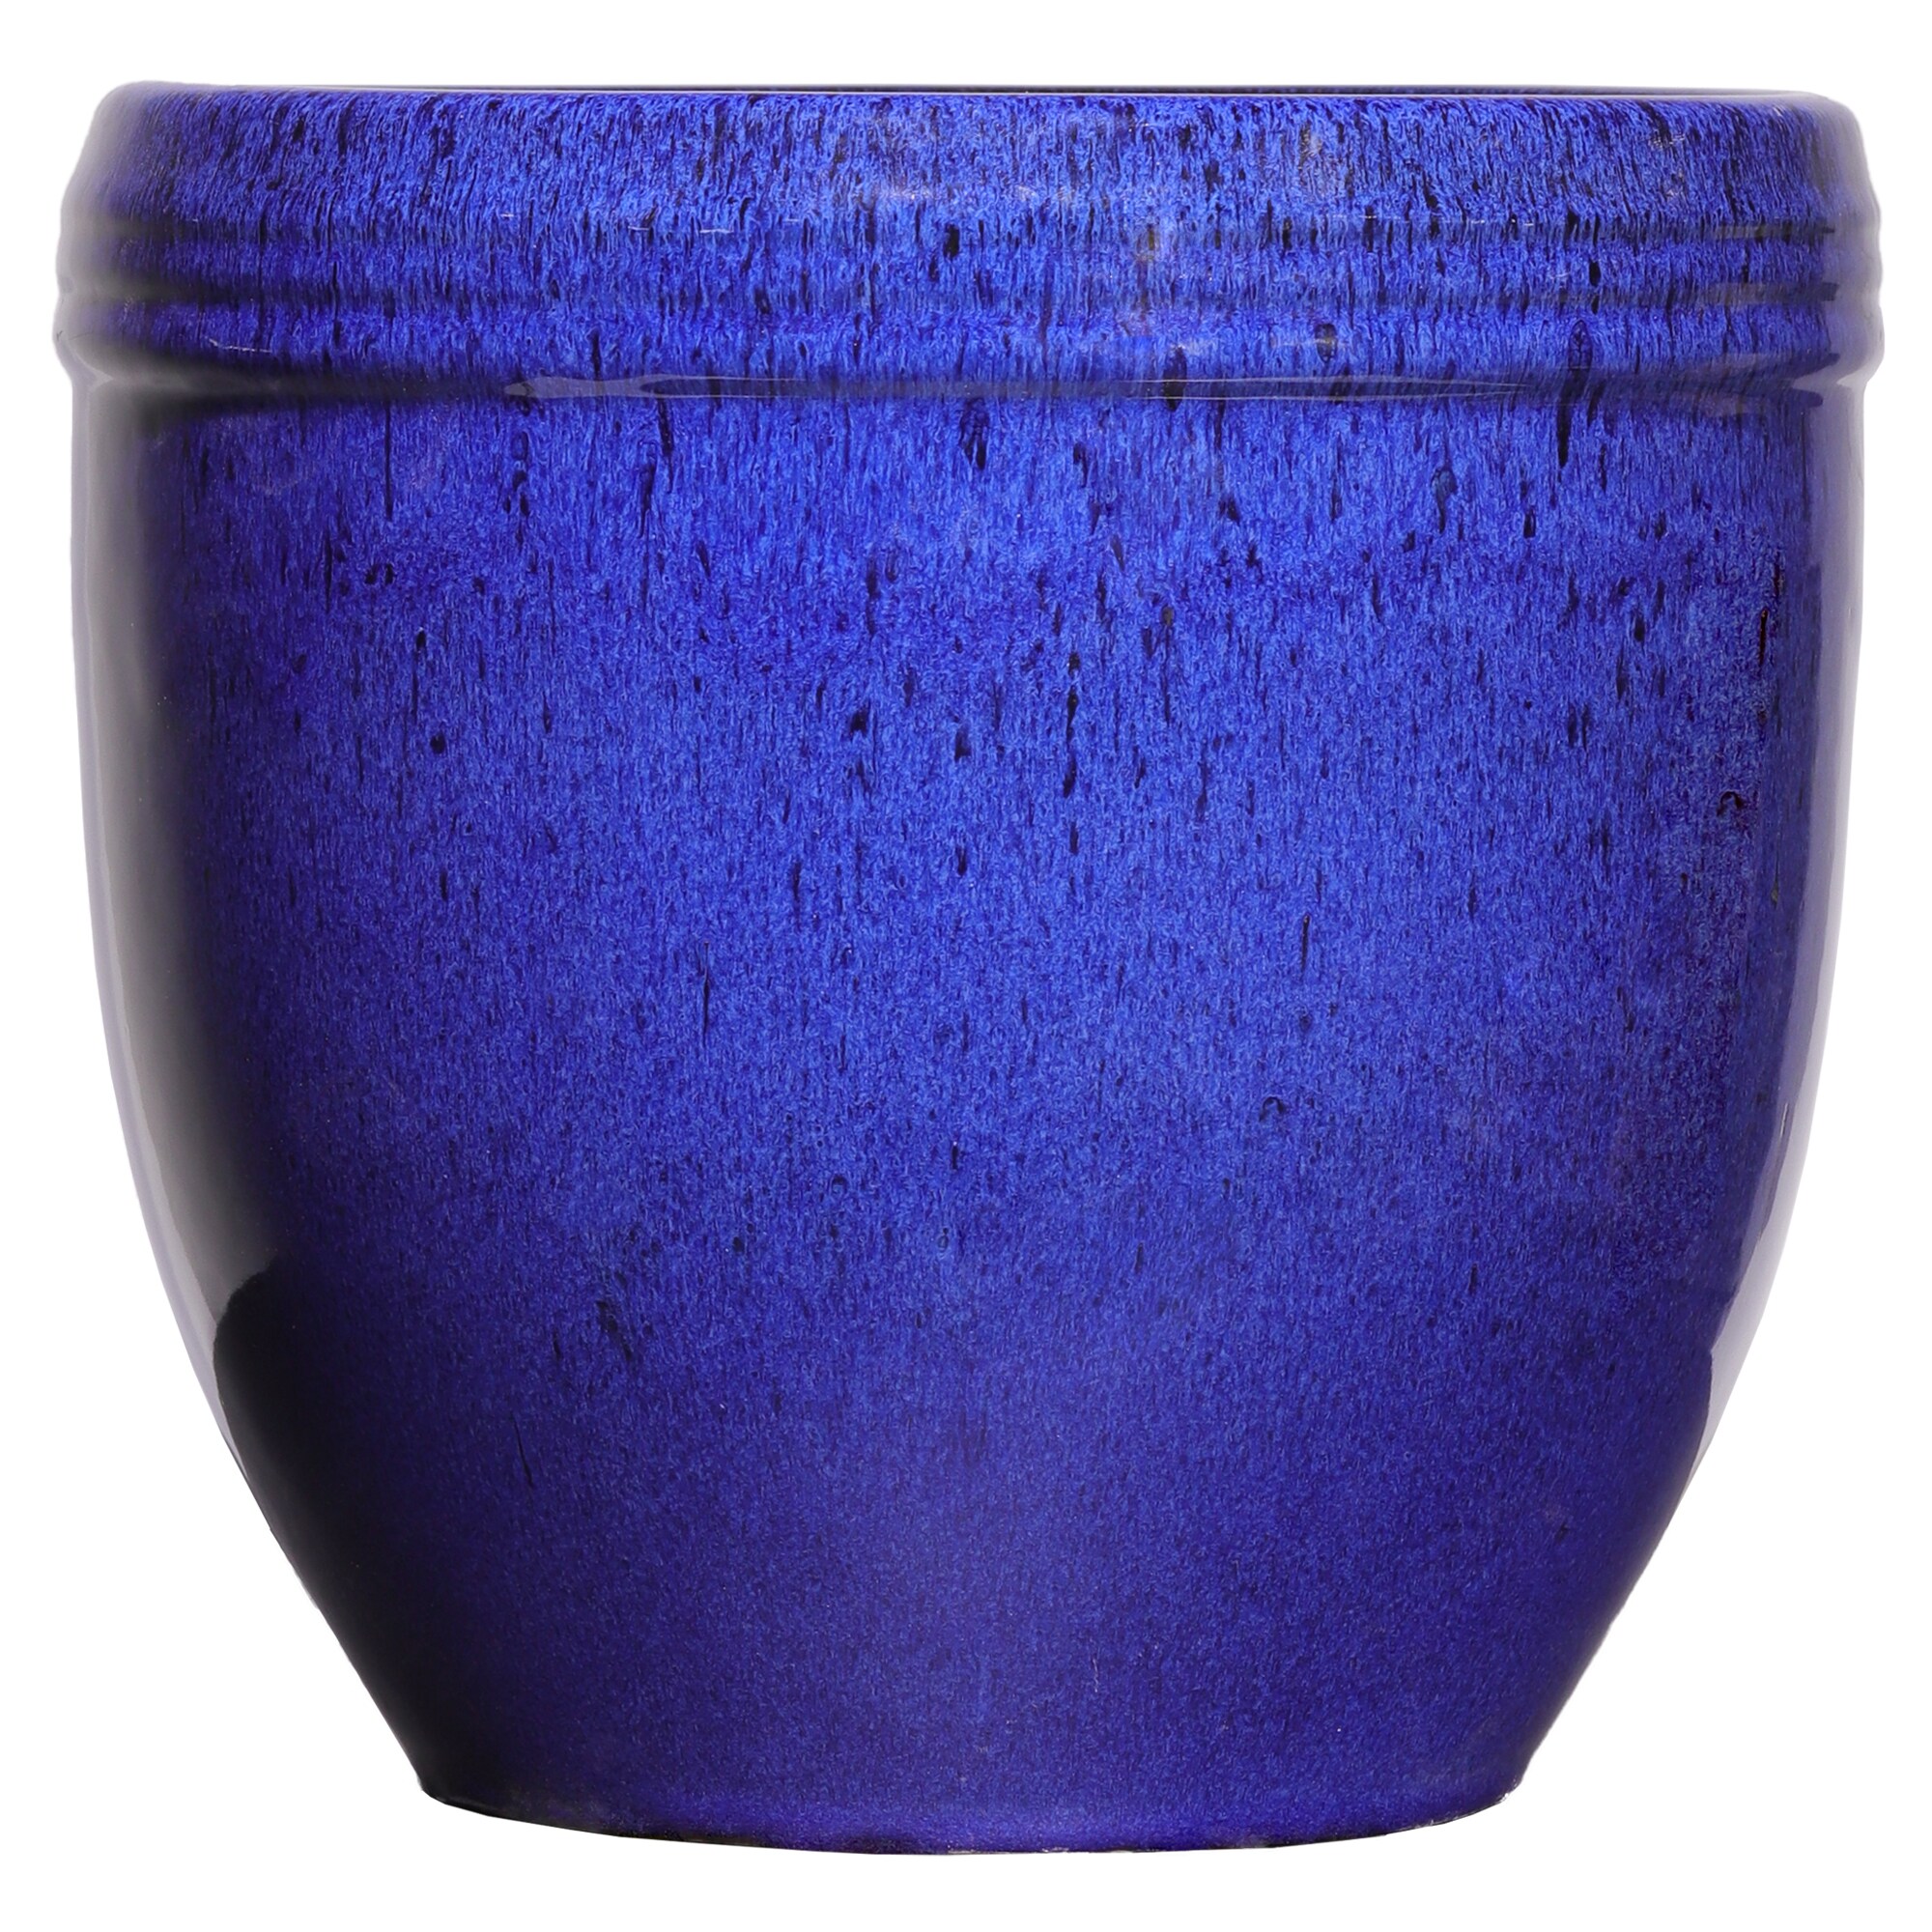 NEW ITEM 5" Round Glazed Ceramic Bonsai Pot in Variegated Azure Blue. 